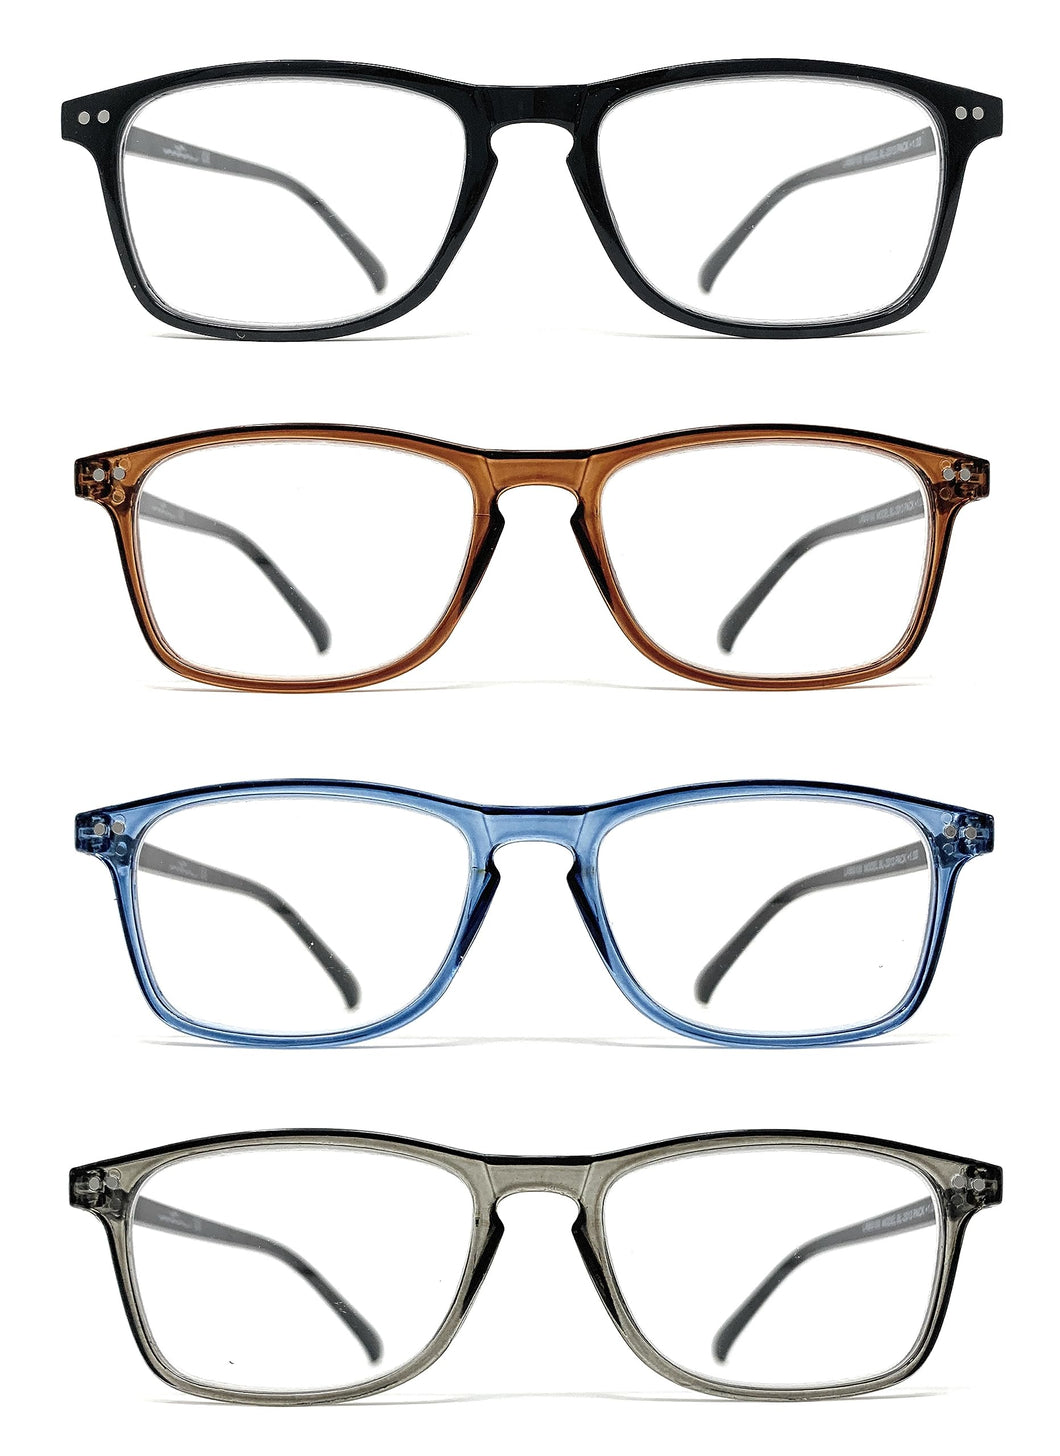 Pack 4 gafas de presbicia marca Vannali modelo Boston - Siempre tendrás un par a mano, estés donde estés.